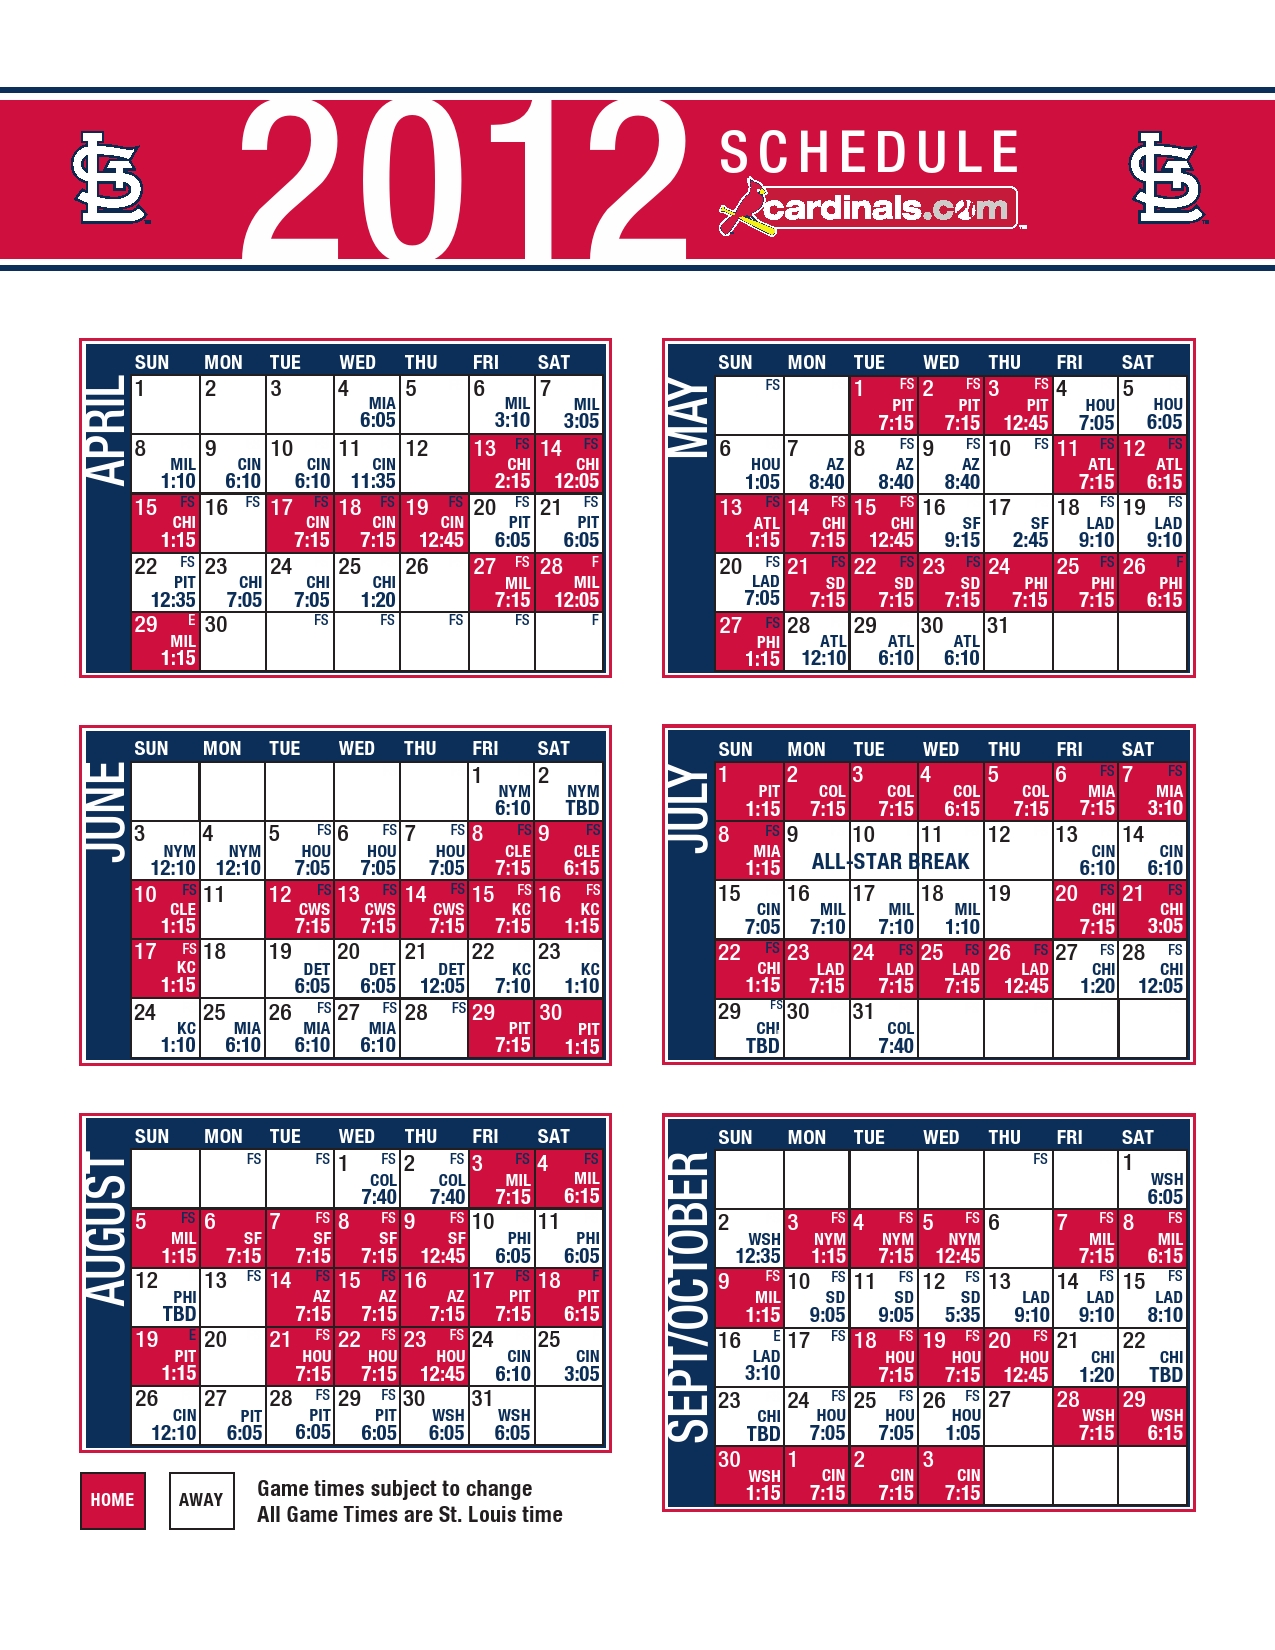 [49+] St Louis Cardinals 2016 Schedule Wallpaper on WallpaperSafari